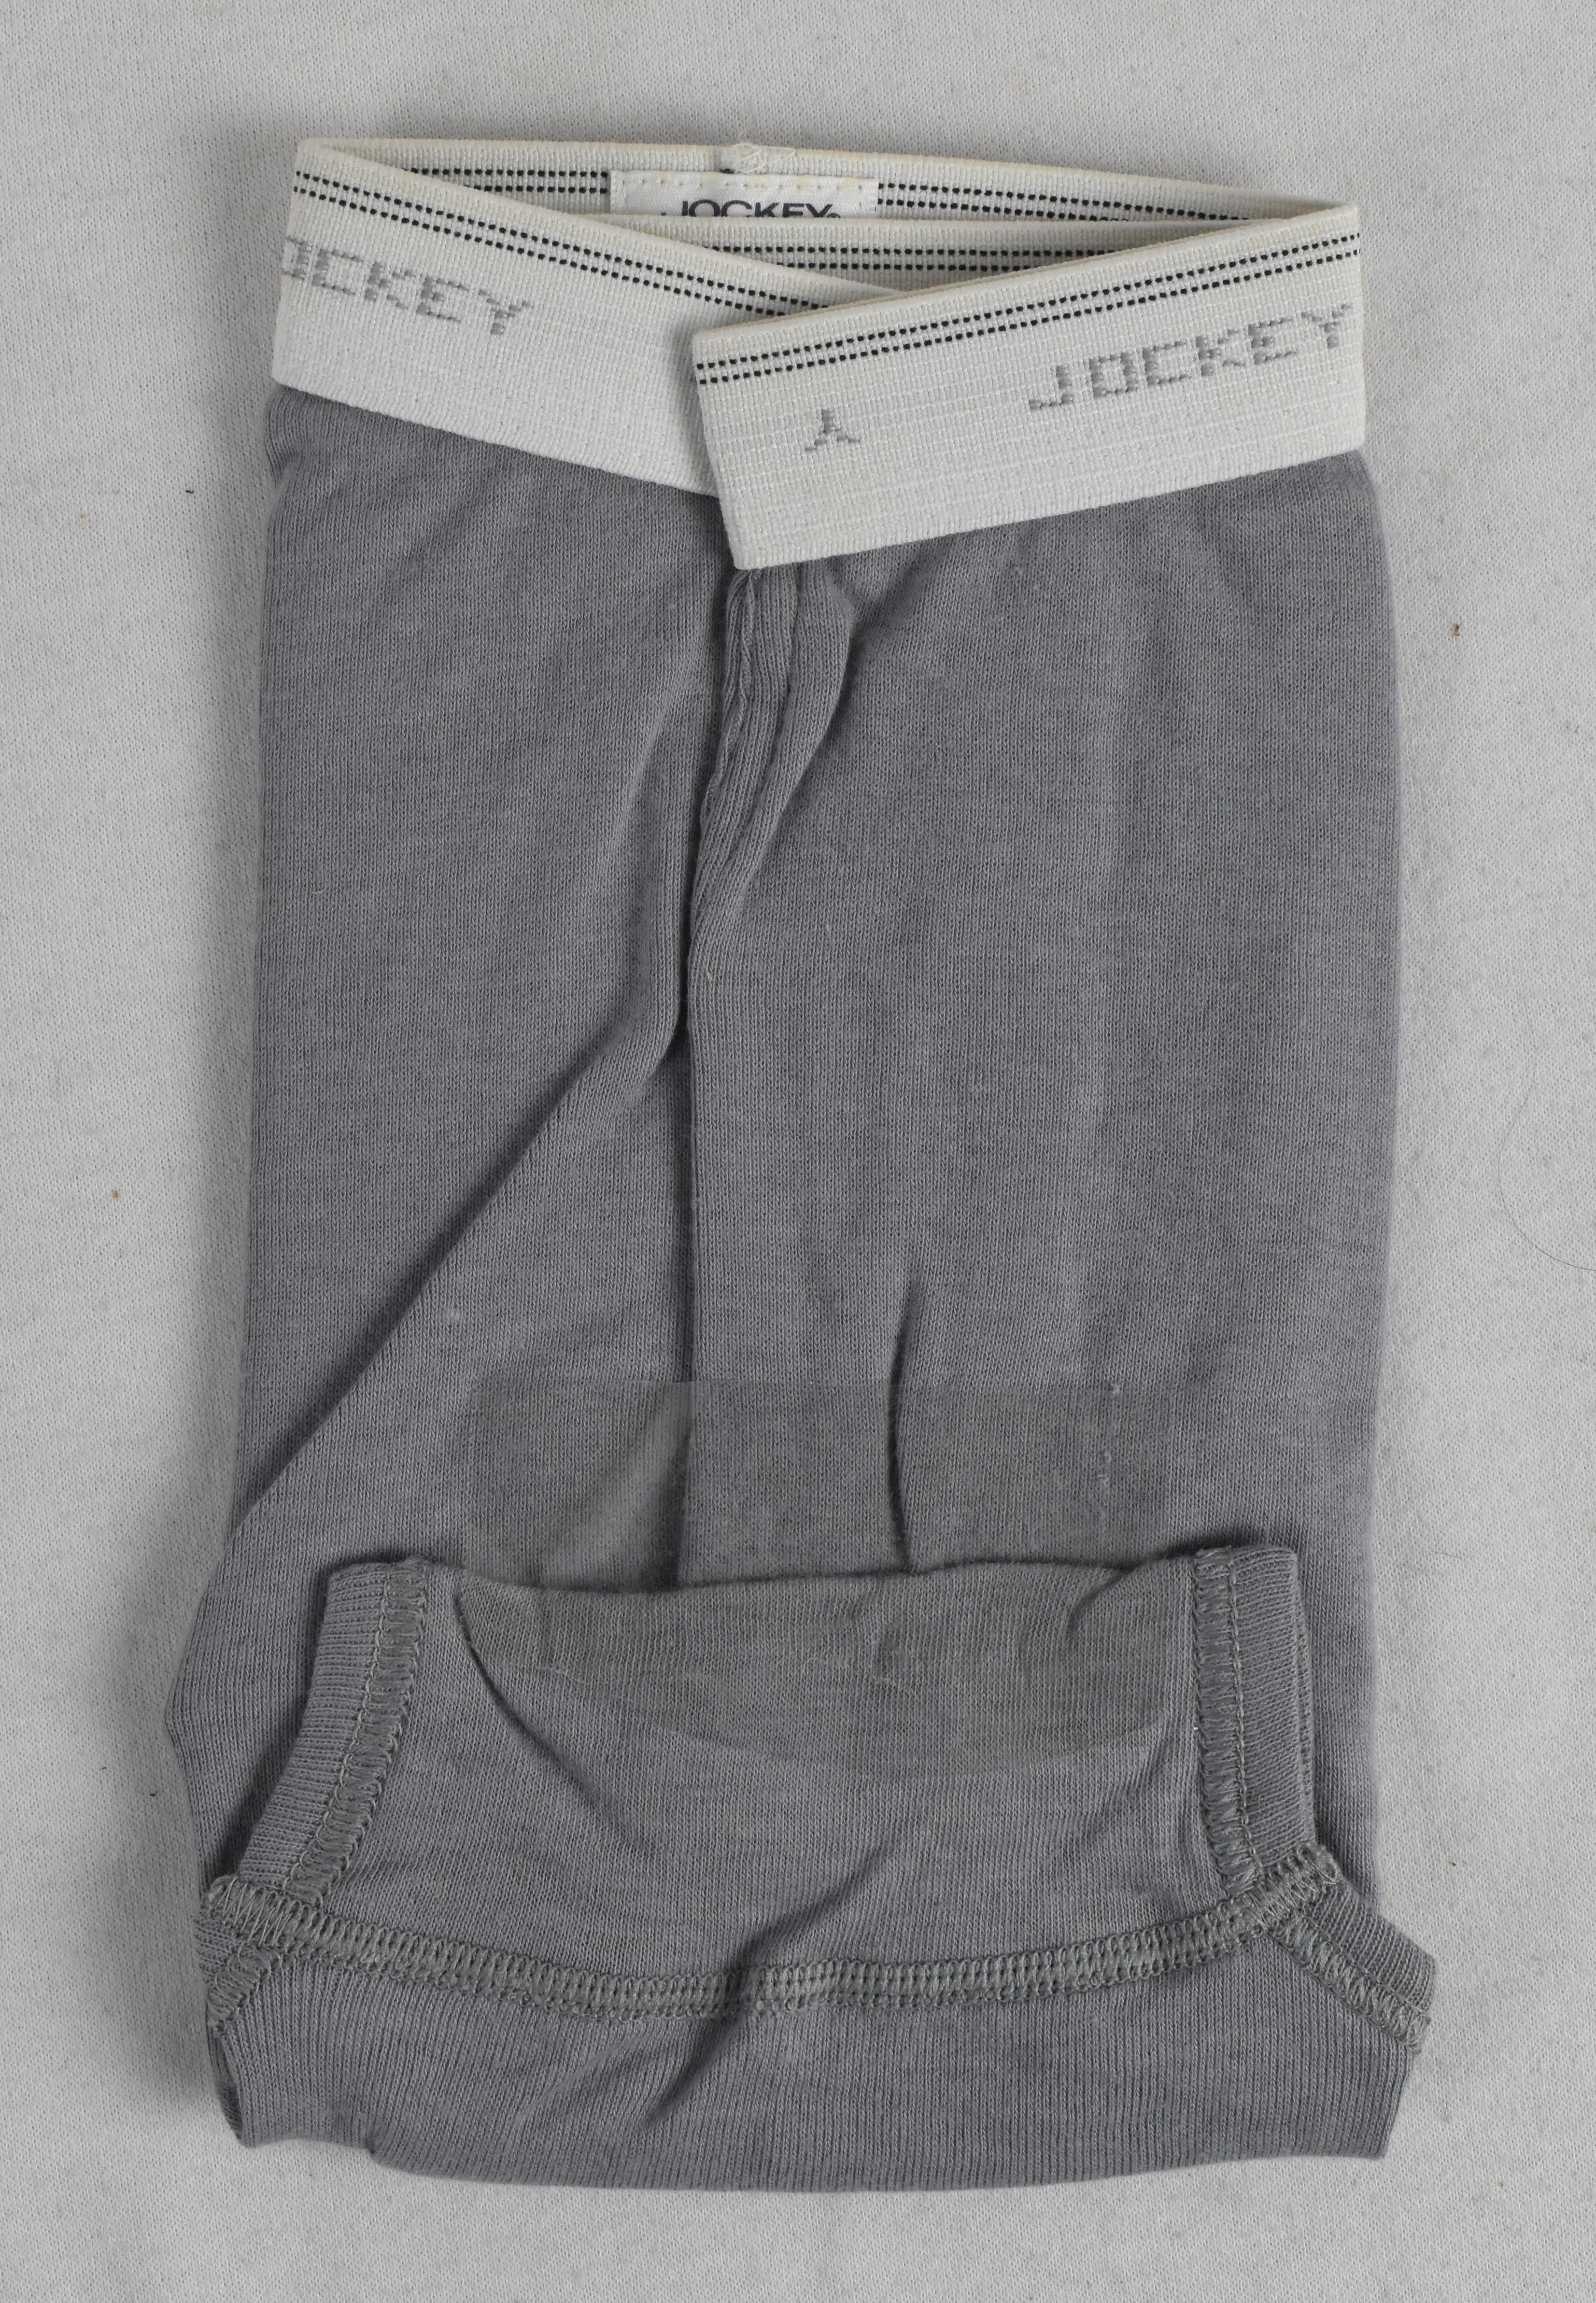 Lot Detail - Jim Palmer Autographed Jockey Underwear